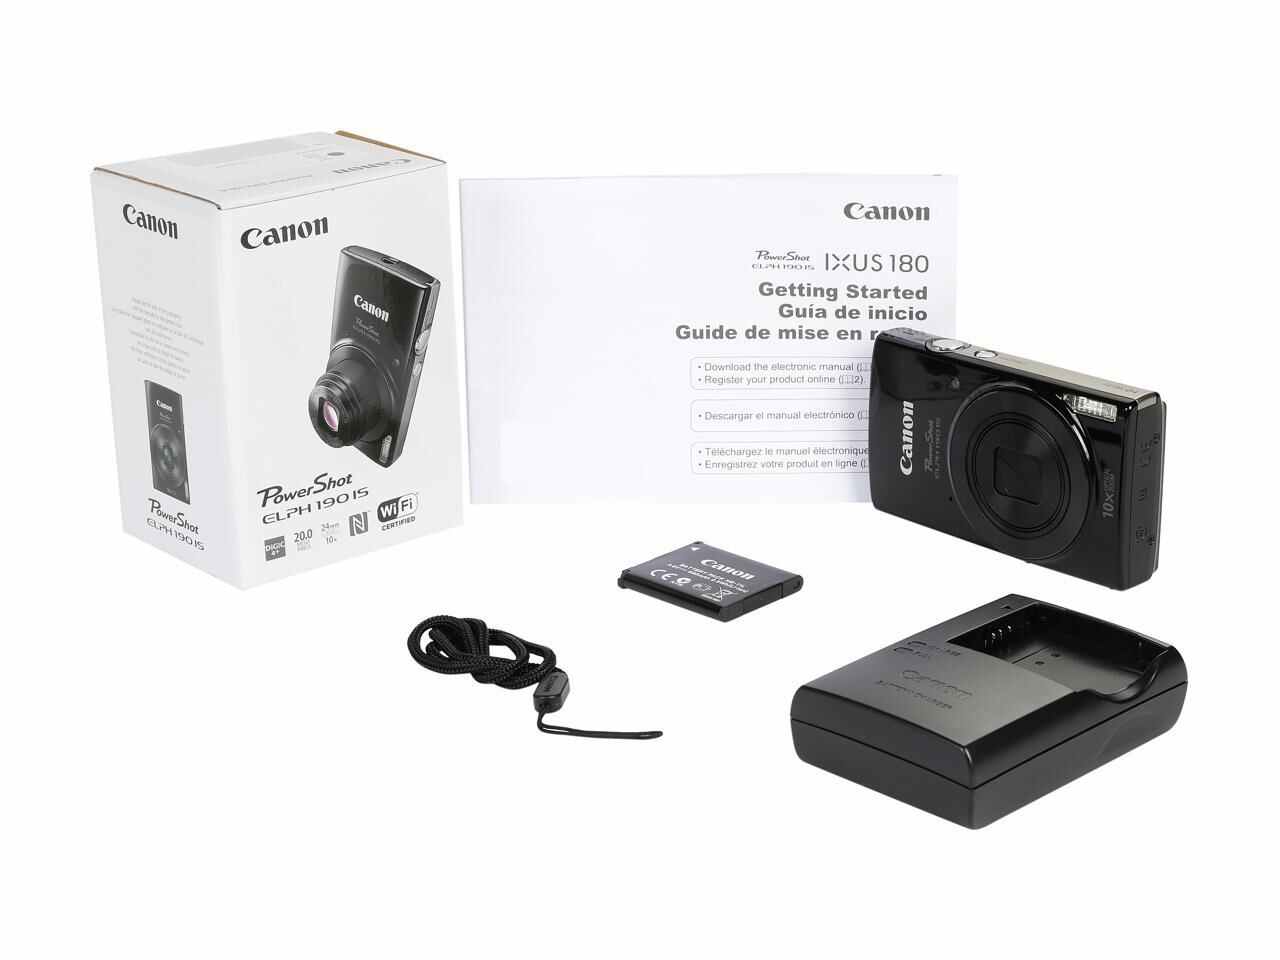 Canon PowerShot ELPH 190 IS Digital Camera - Black